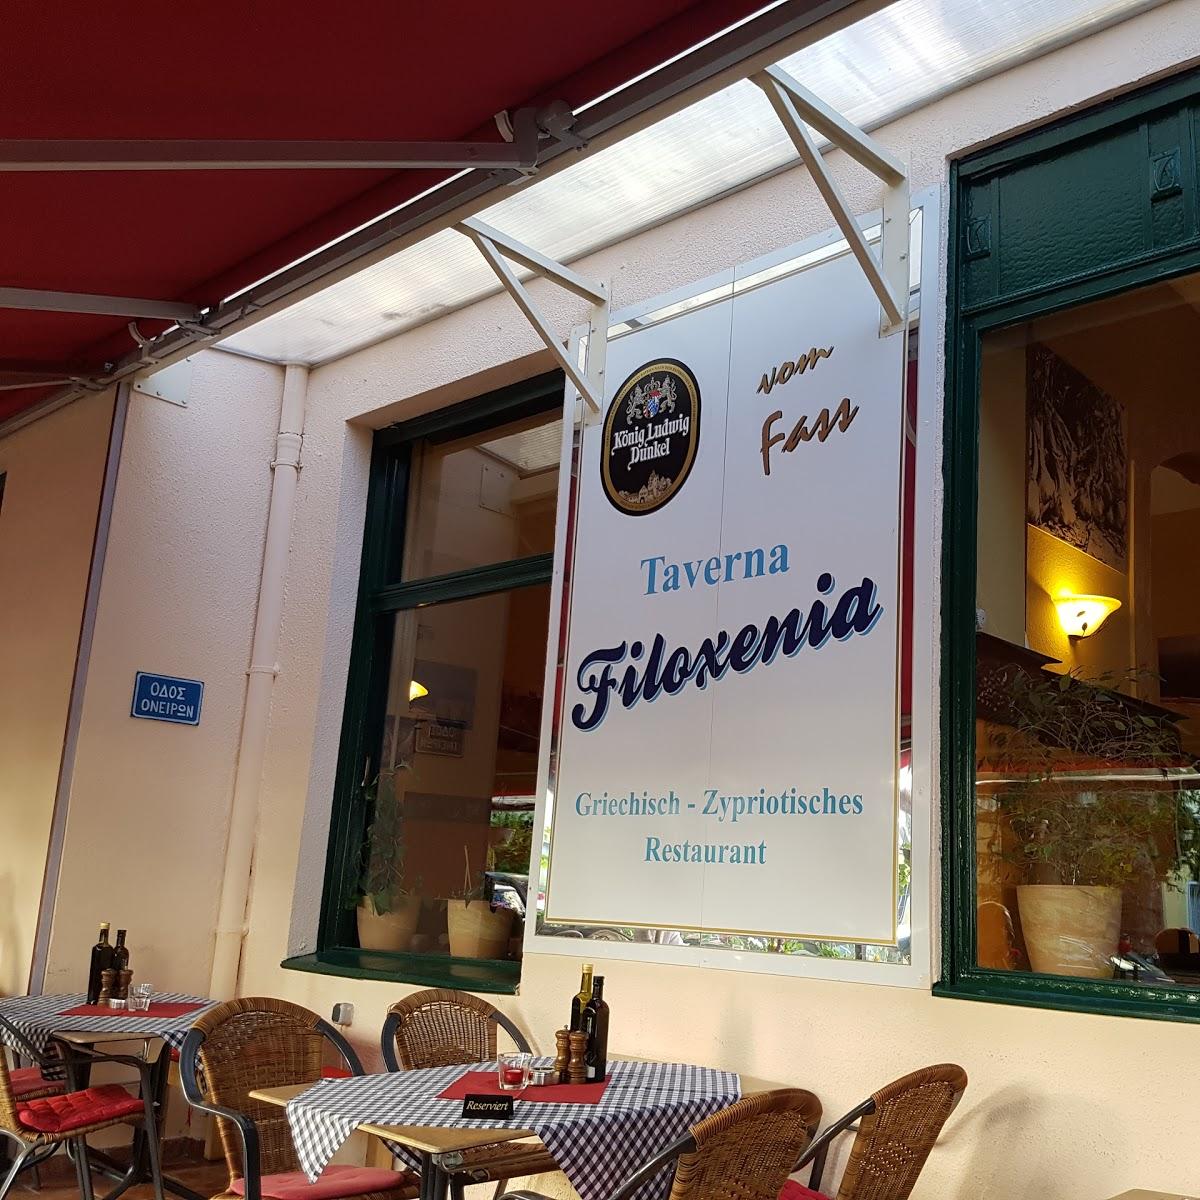 Restaurant "Taverna Filoxenia" in Berlin